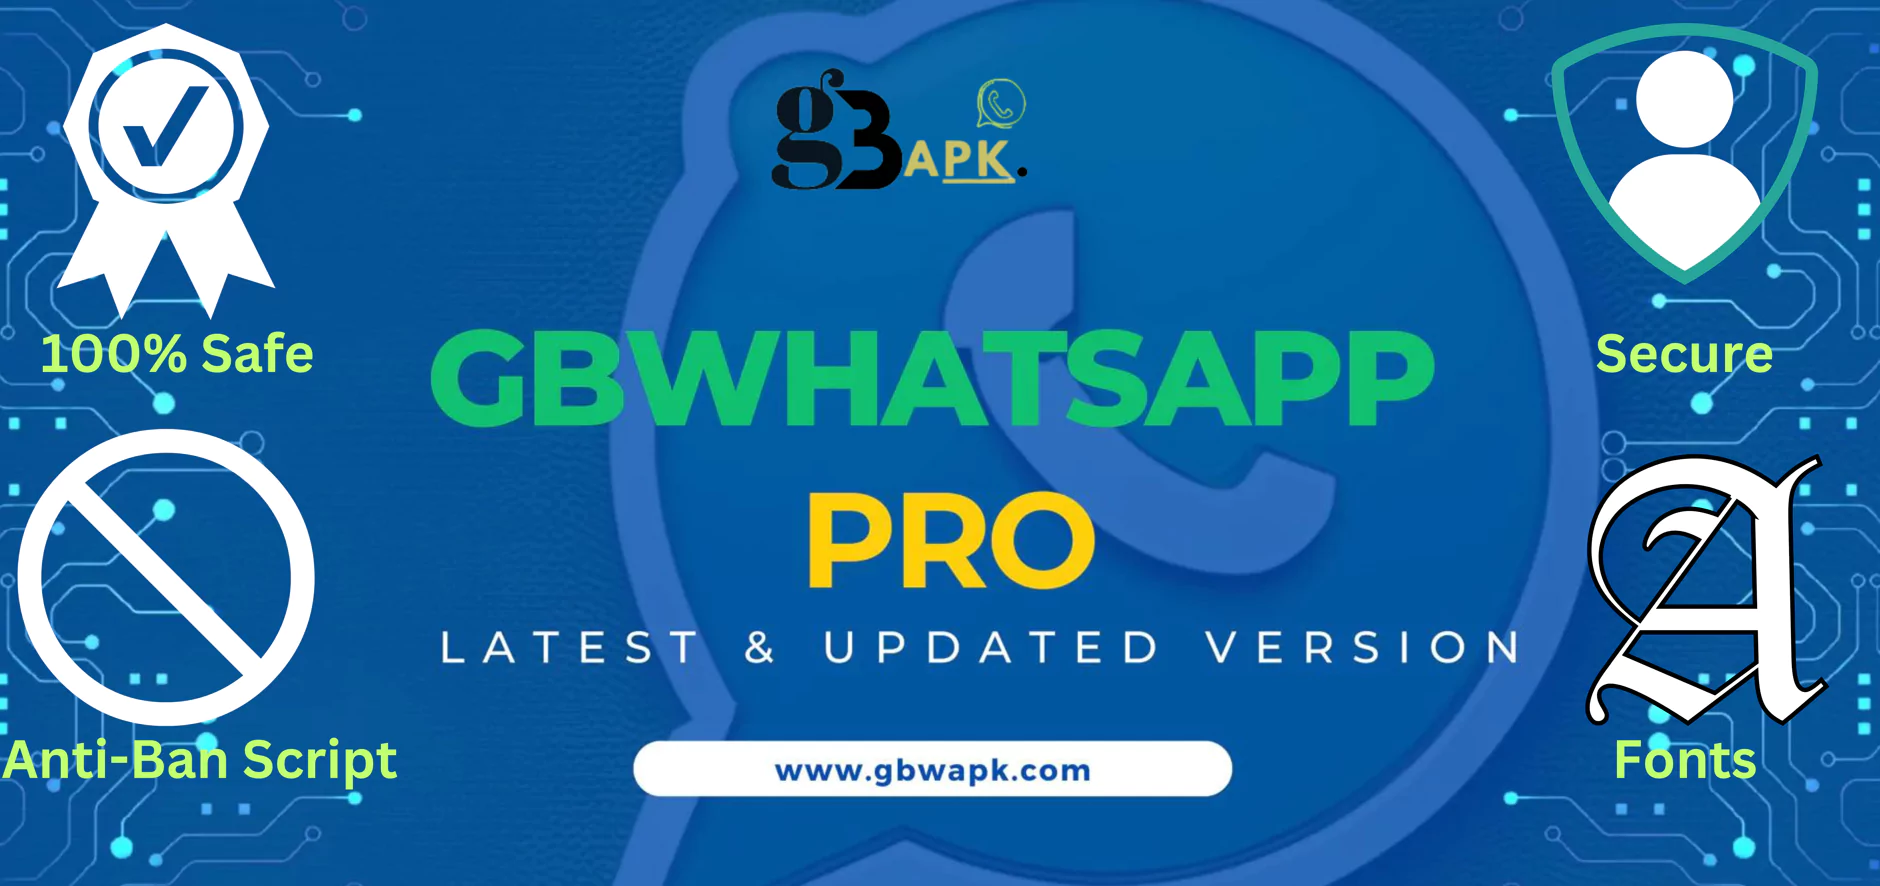 gbwhatsapp pro features  espanol